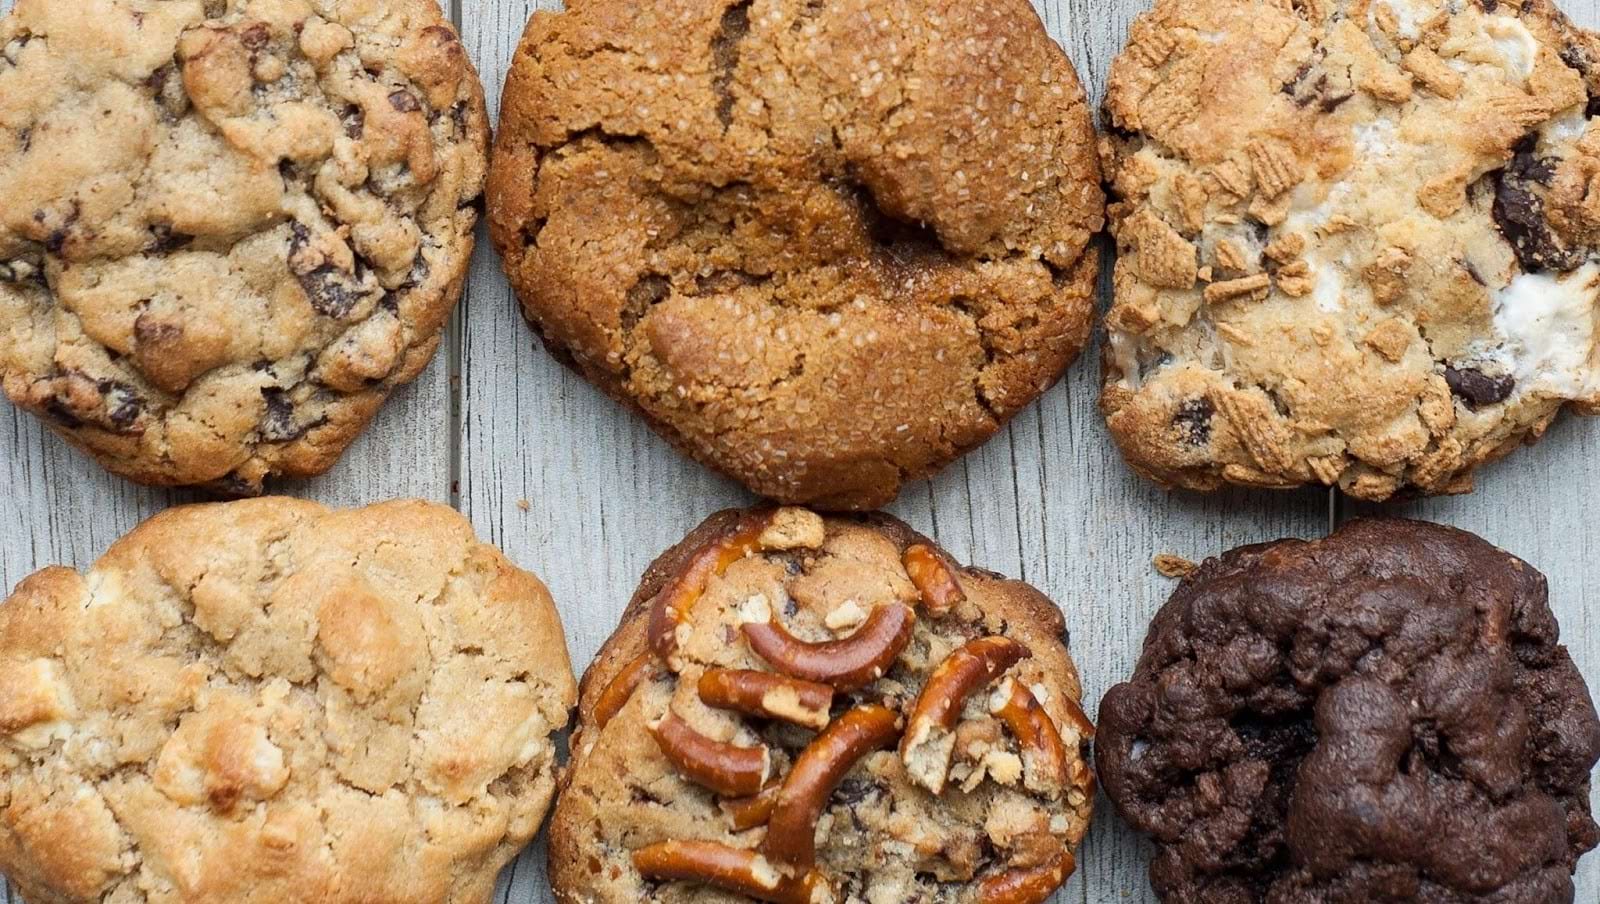 bang-cookies-review-5